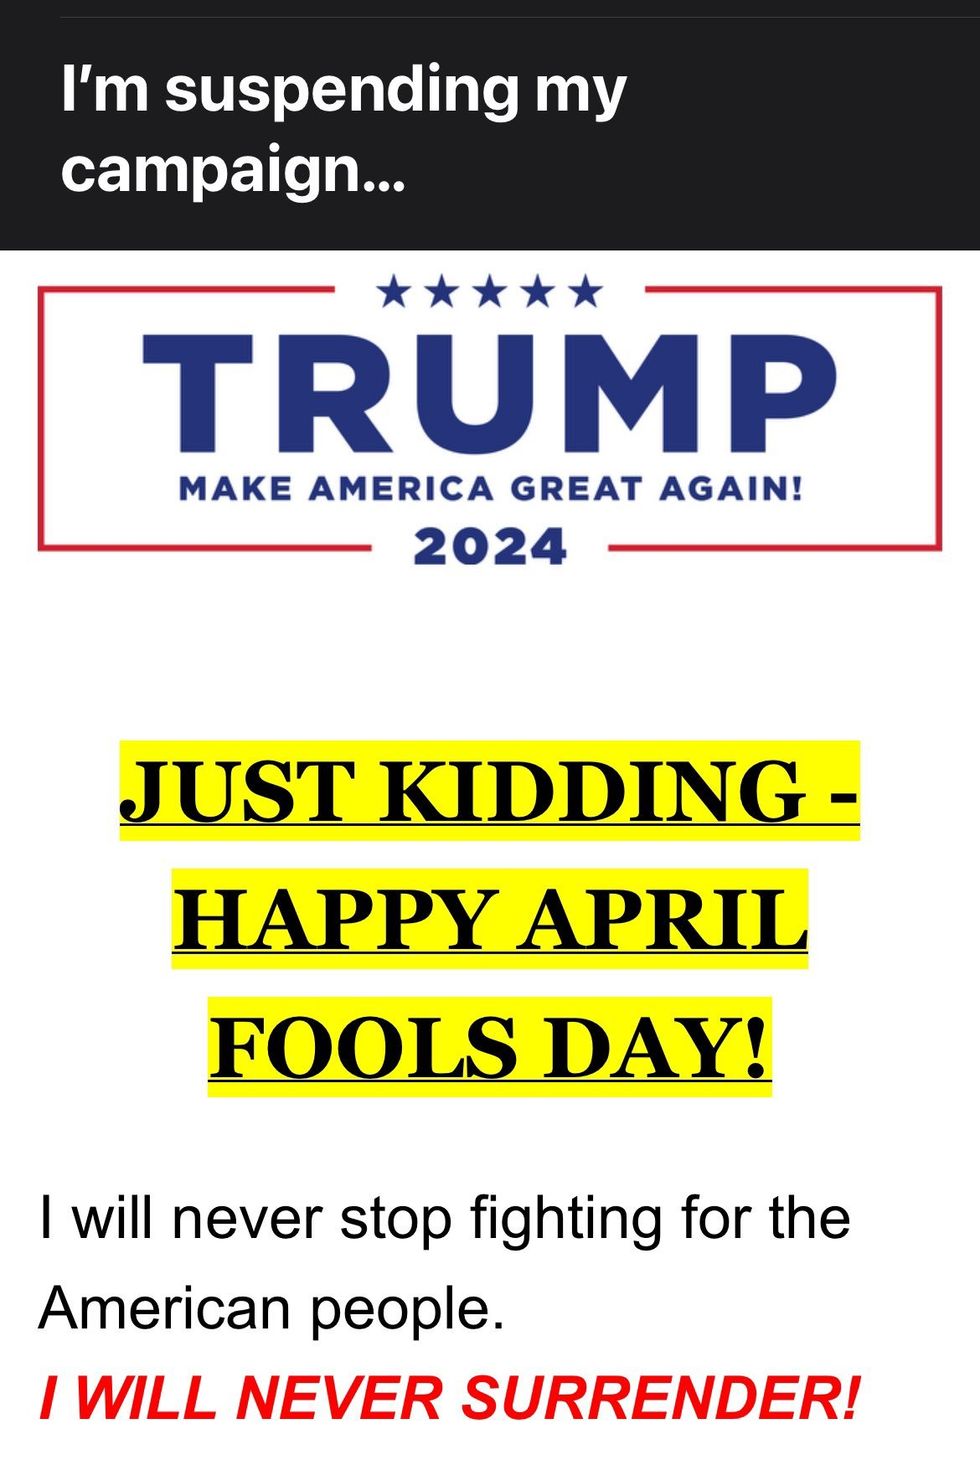 Donald Trump's April Fools' Day campaign message